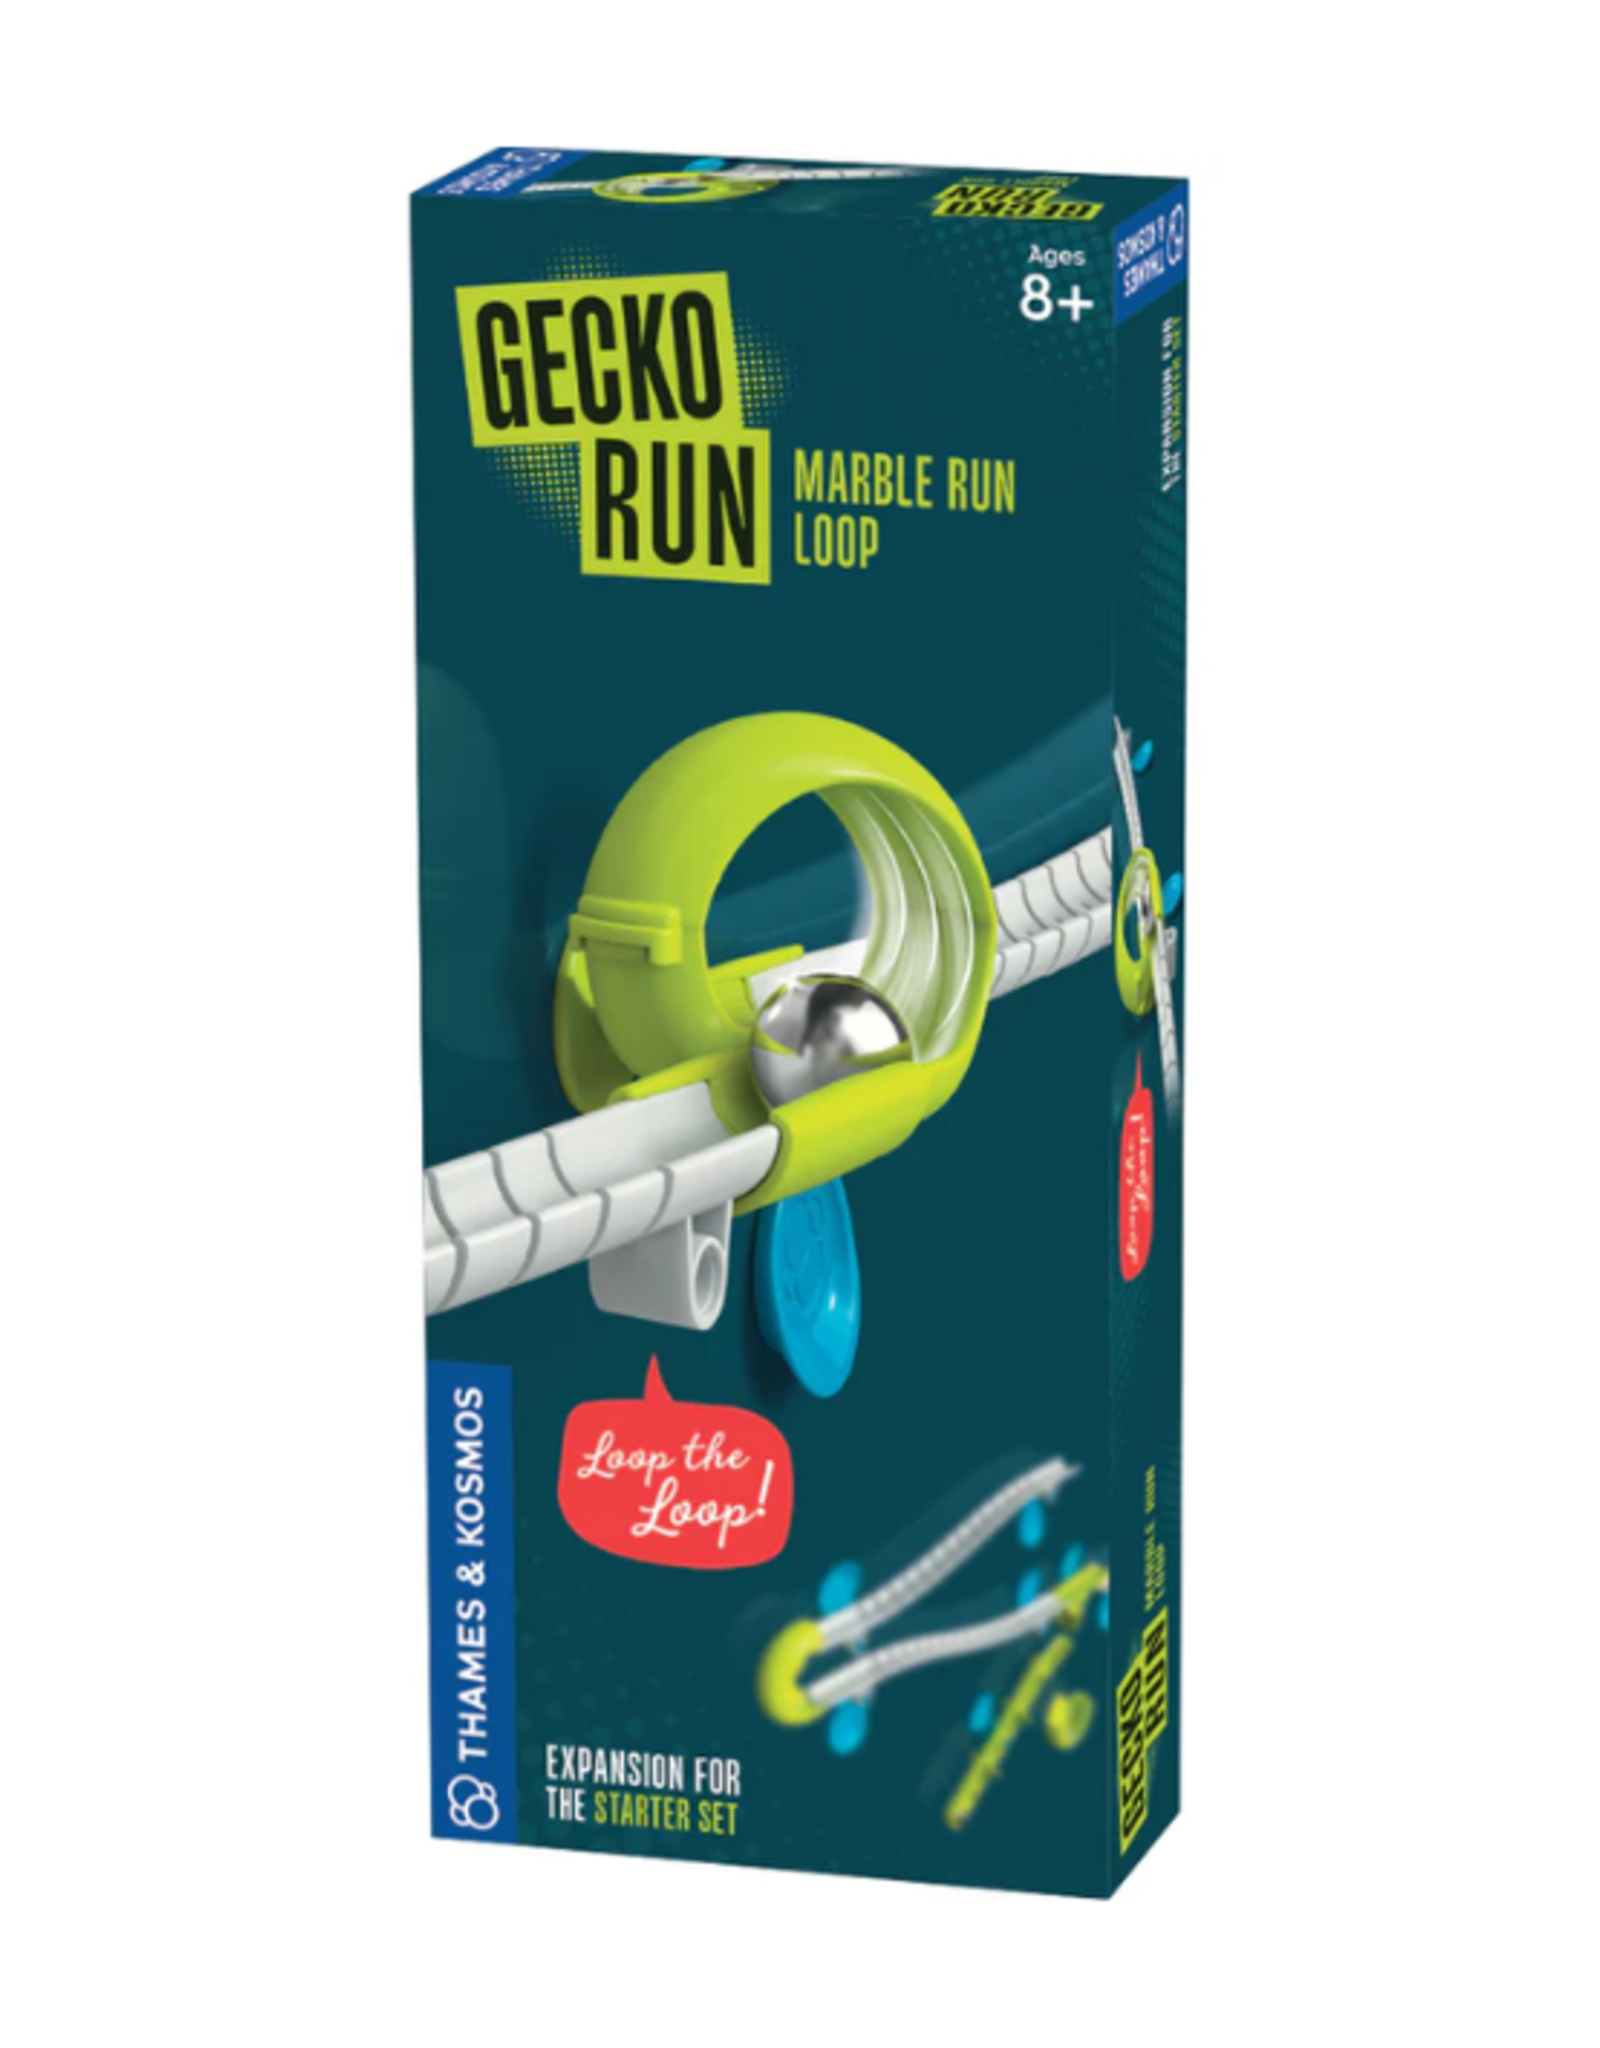 Thames & Kosmos Thames & Kosmos - Gecko Run: Marble Run Loop Expansion Pack